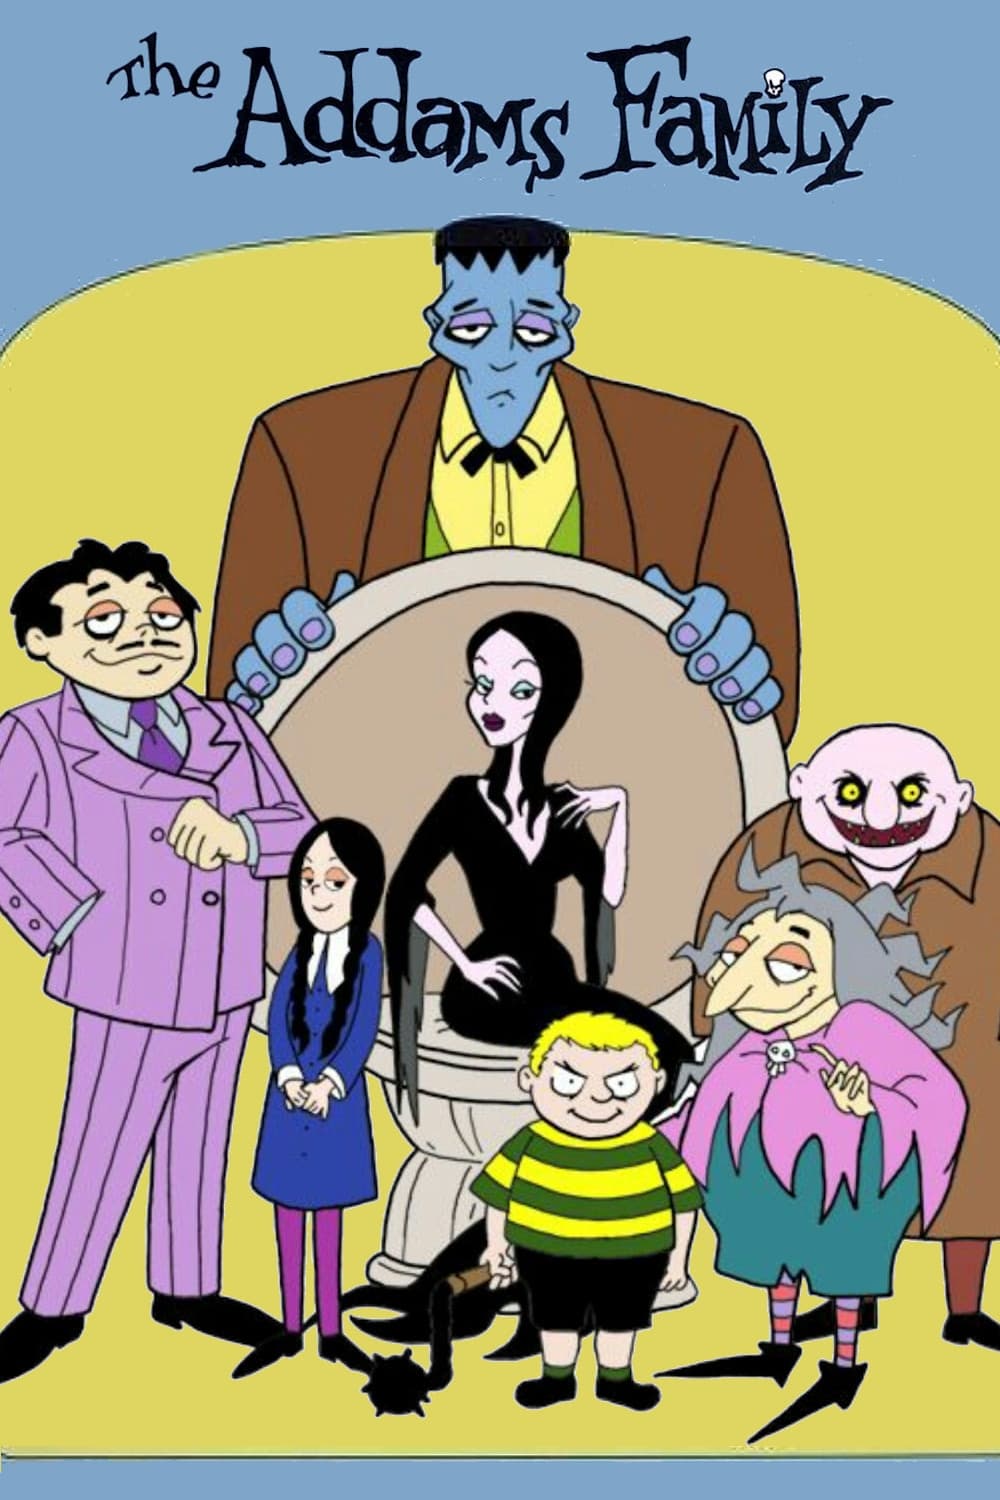 A Família Addams (1992)